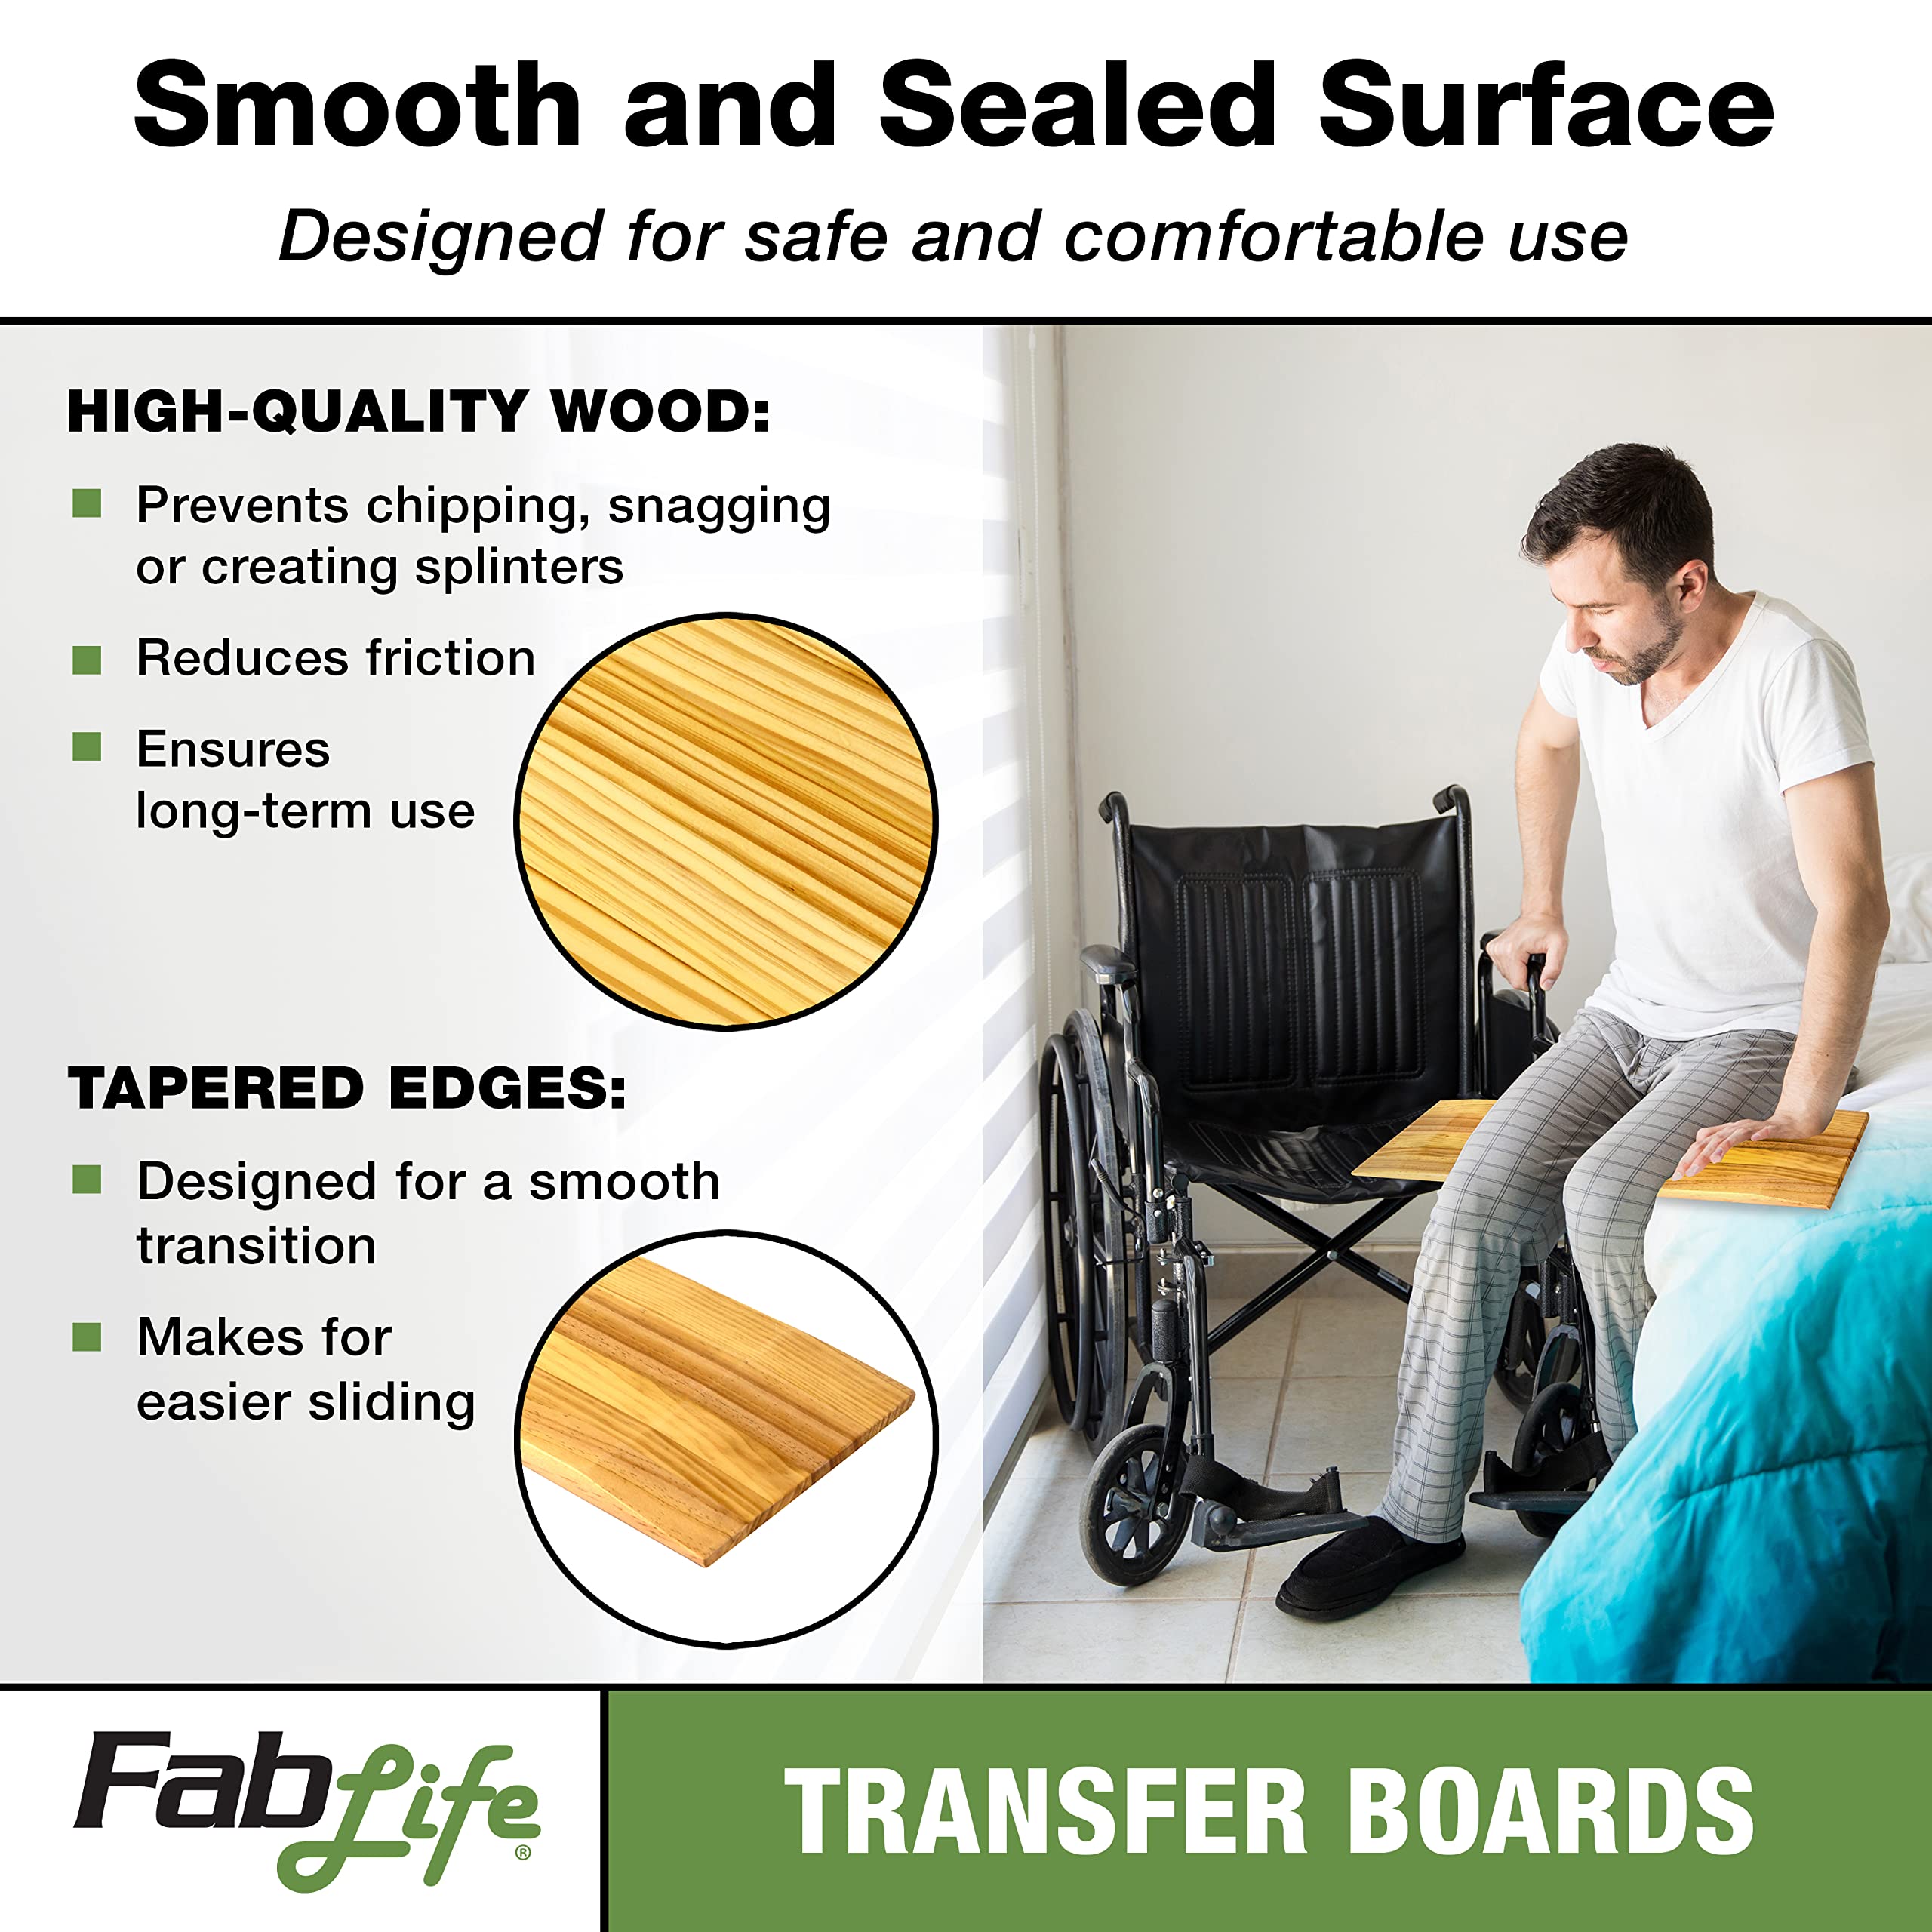 FabLife Deluxe Hardwood Transfer Board for Easy Patient Transfer, Slide Assist Device for Transportation, 2 Handgrips 8